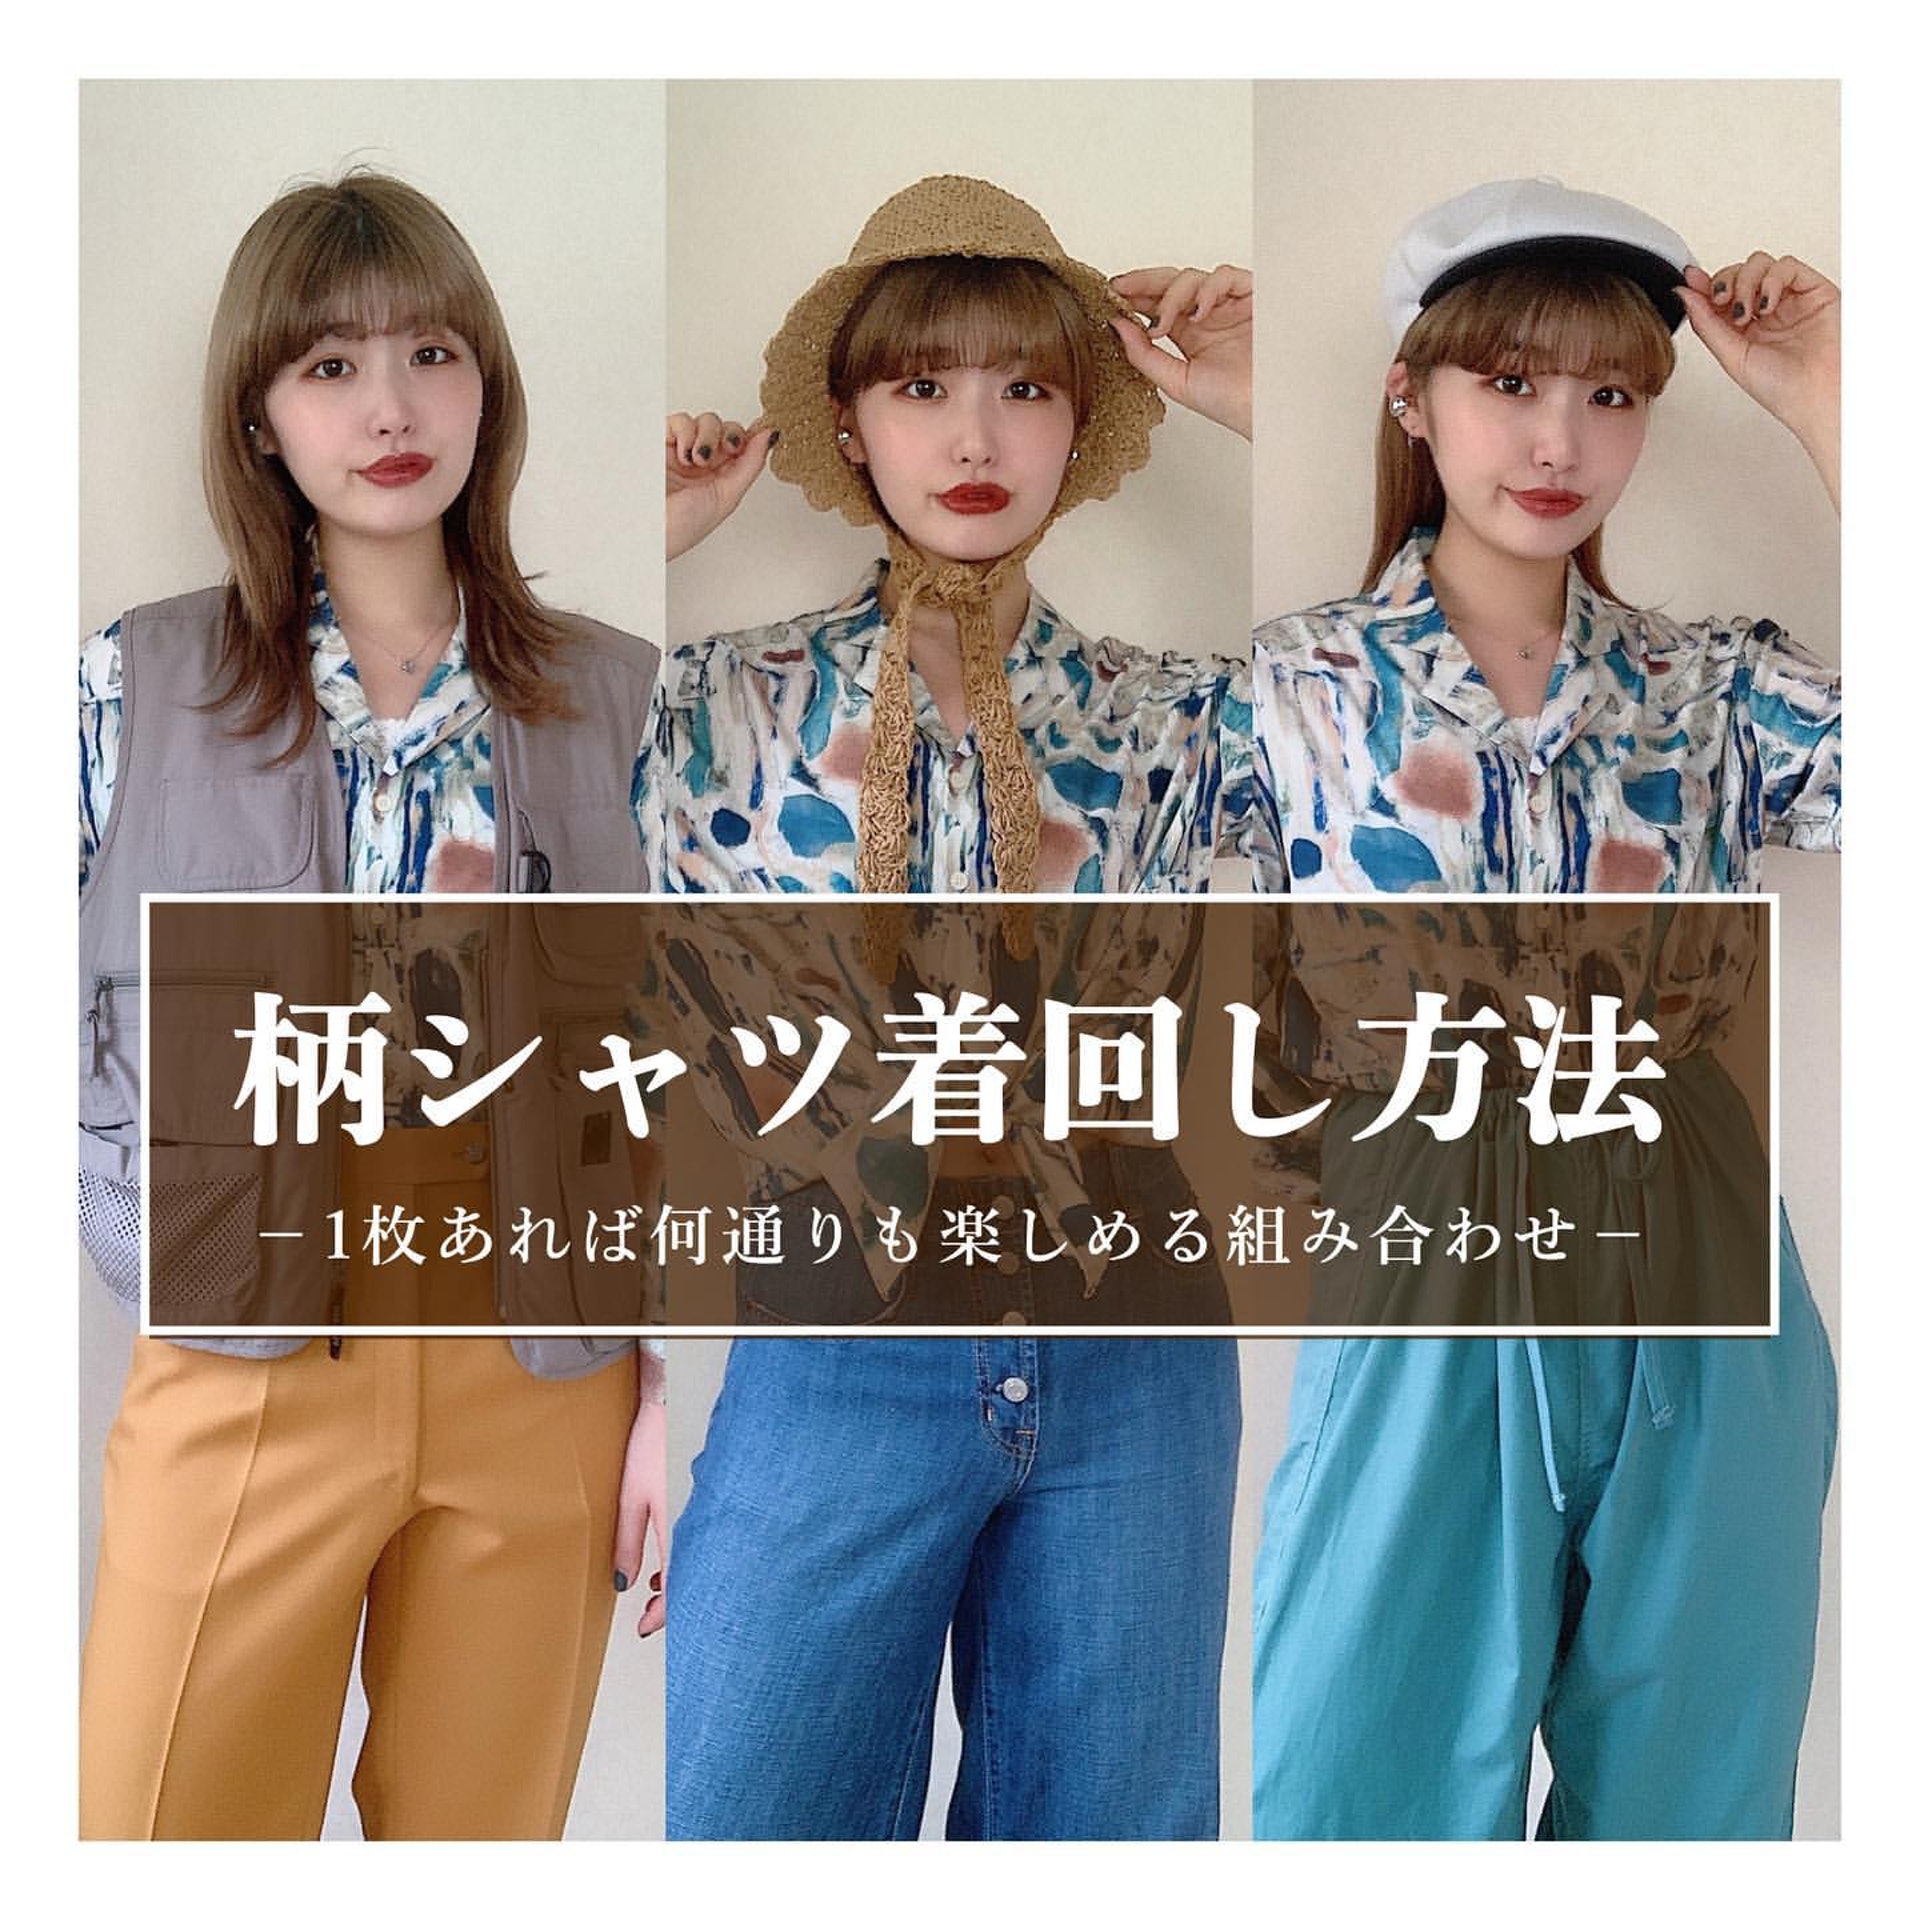 日本女生Chaki以同一件印花圖案恤衫示範了6天的重覆穿搭法。(__nmsk13@Instagram)